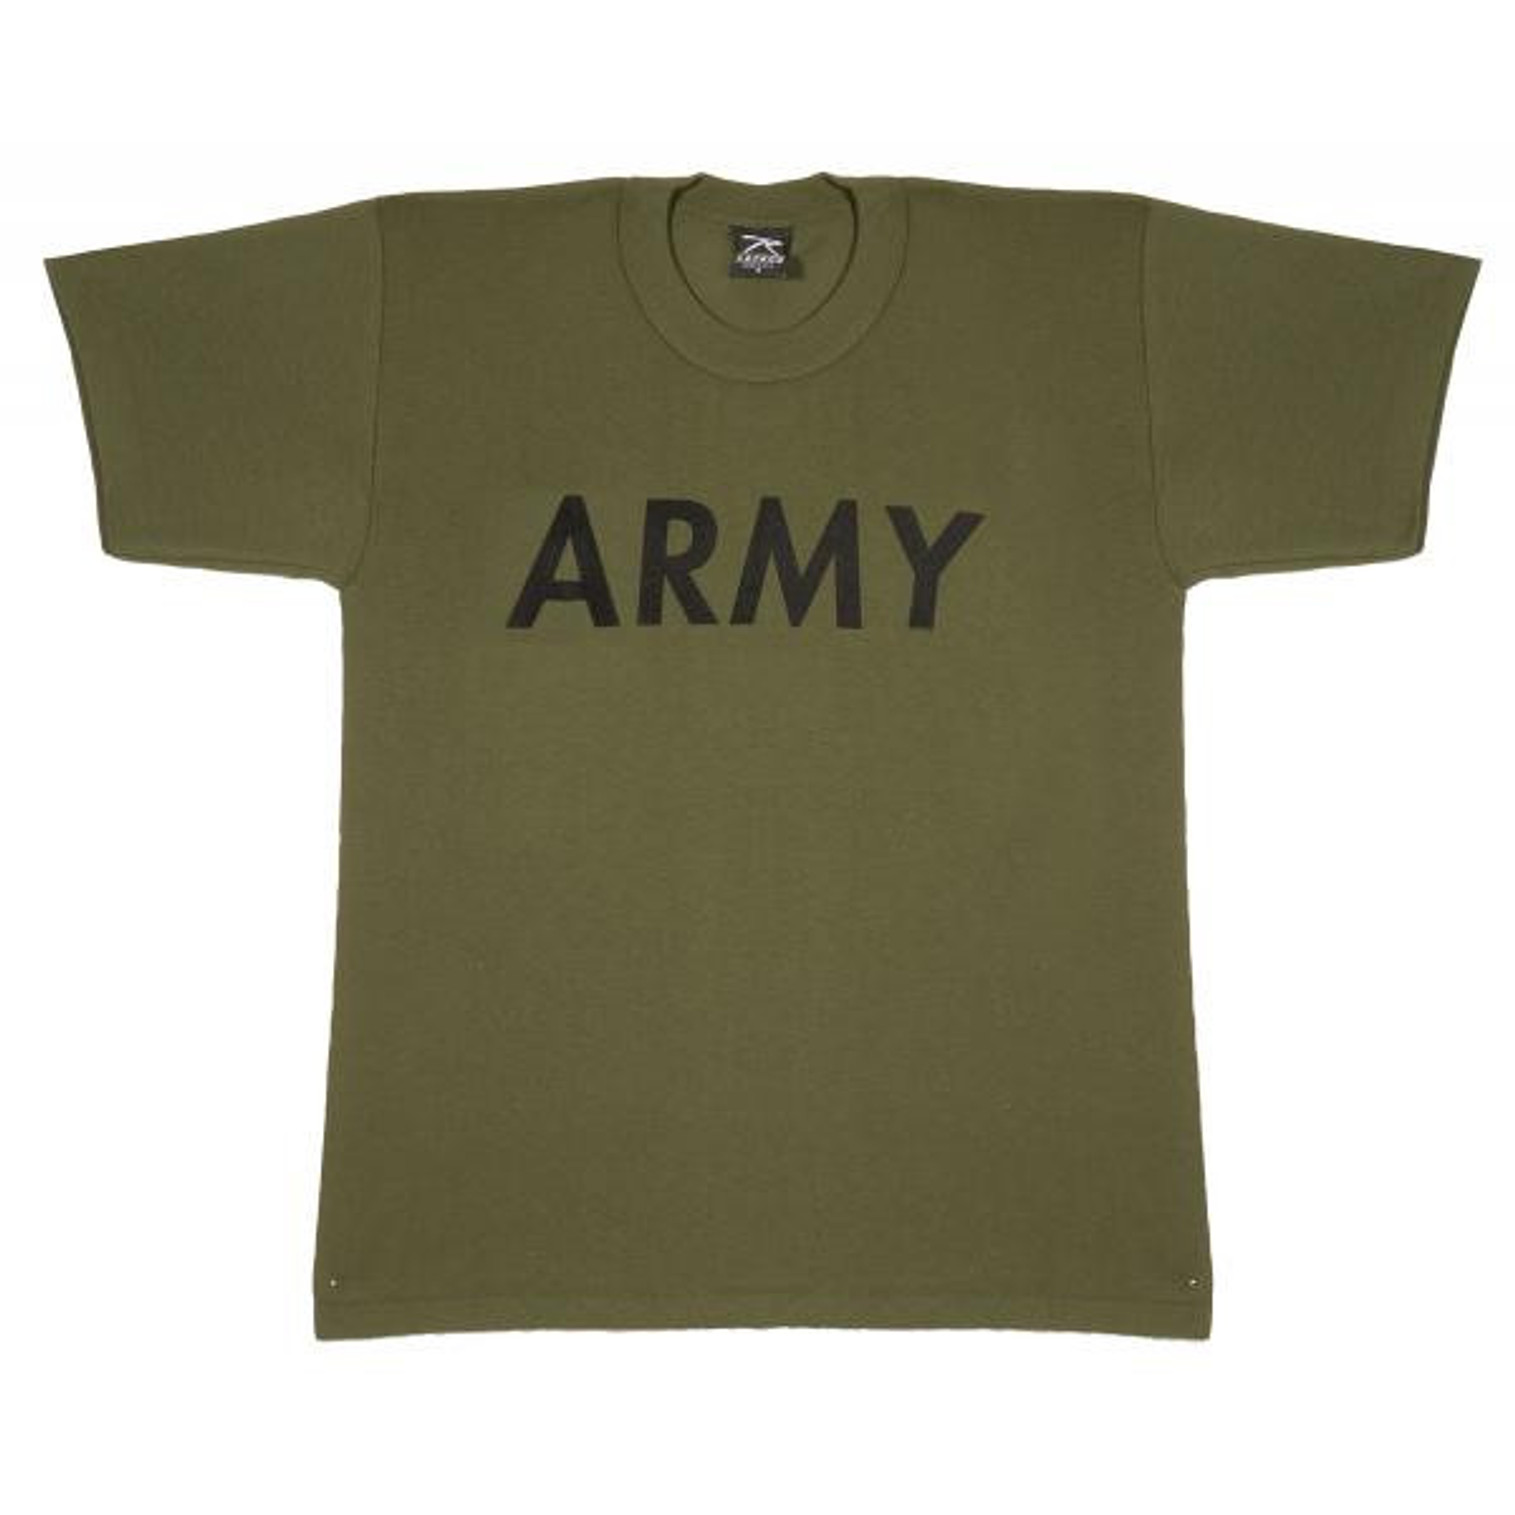 Rothco Kids Army Physical Training T-Shirt - Olive Drab Army